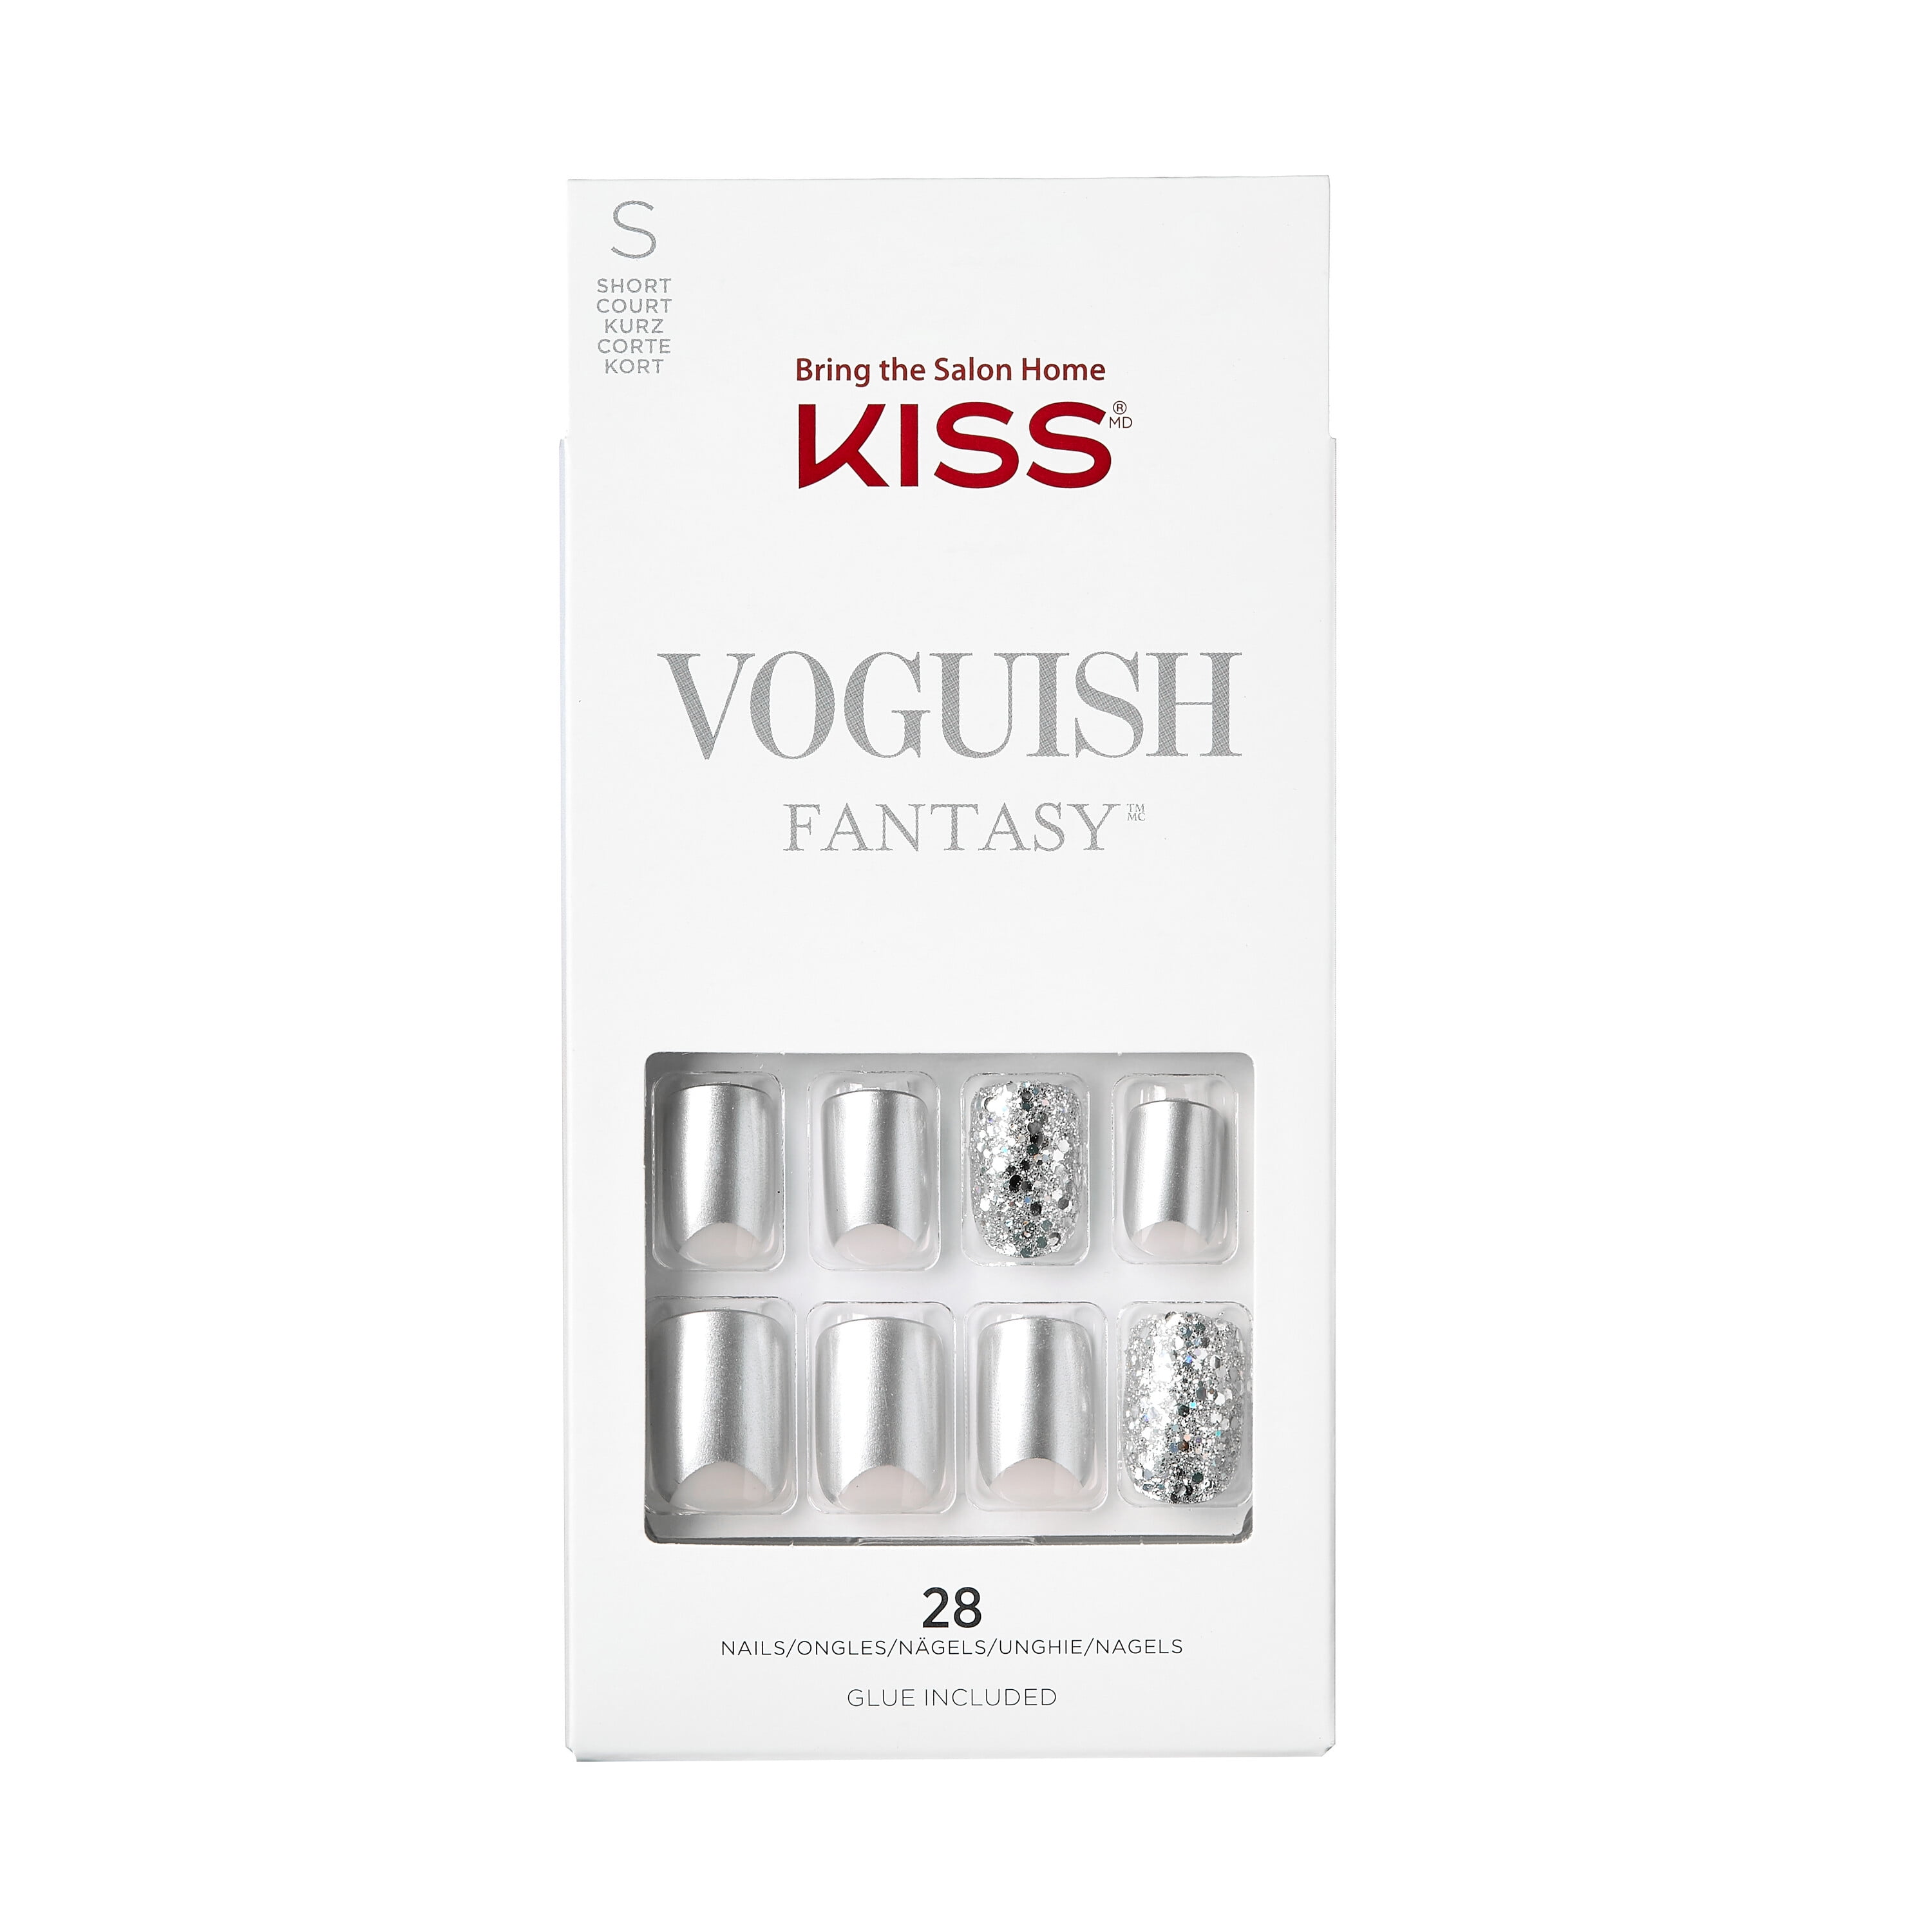 KISS Voguish Fantasy Fake Nails, ‘Sunbathing’, 28 Count - Walmart.com